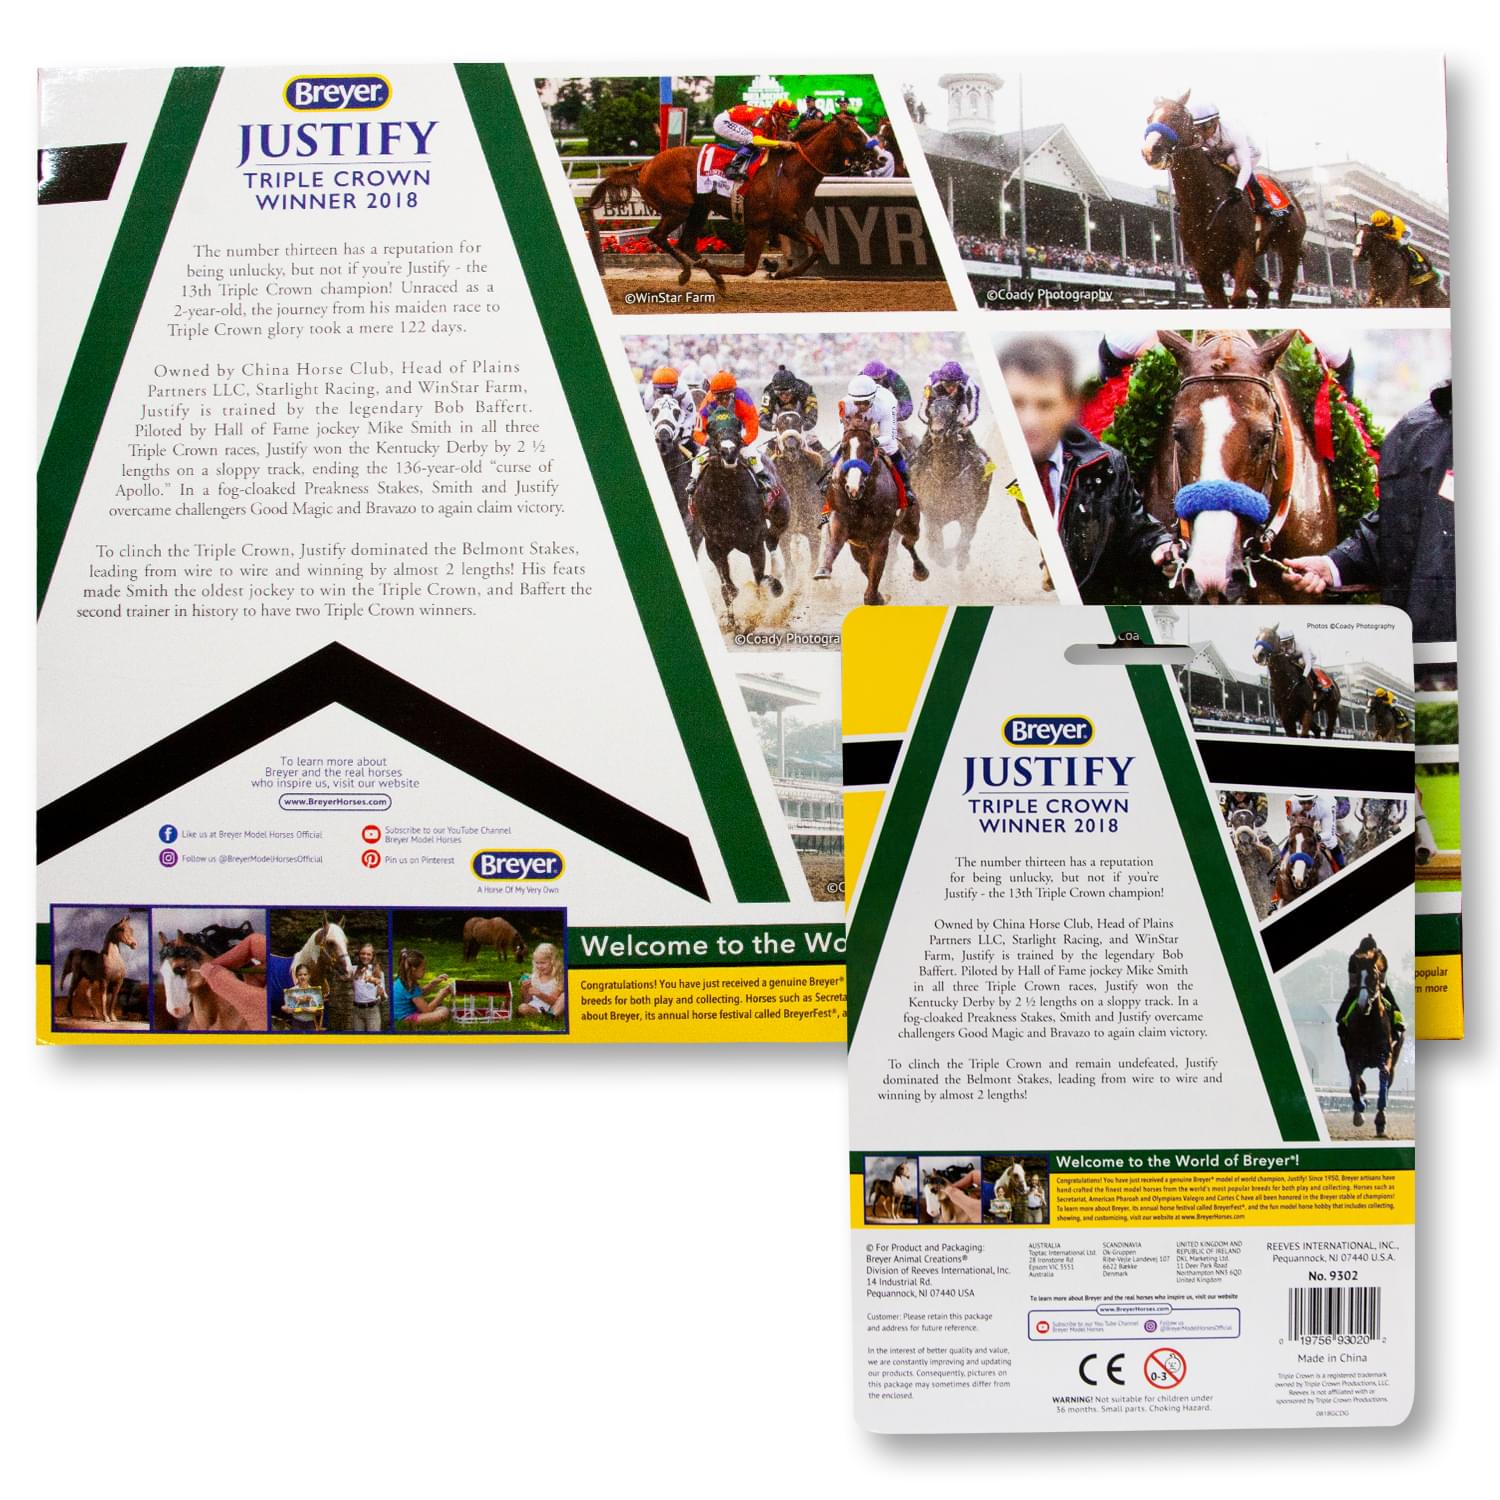 Breyer Justify Horse Model Set | Includes Traditional & Stablemates Models